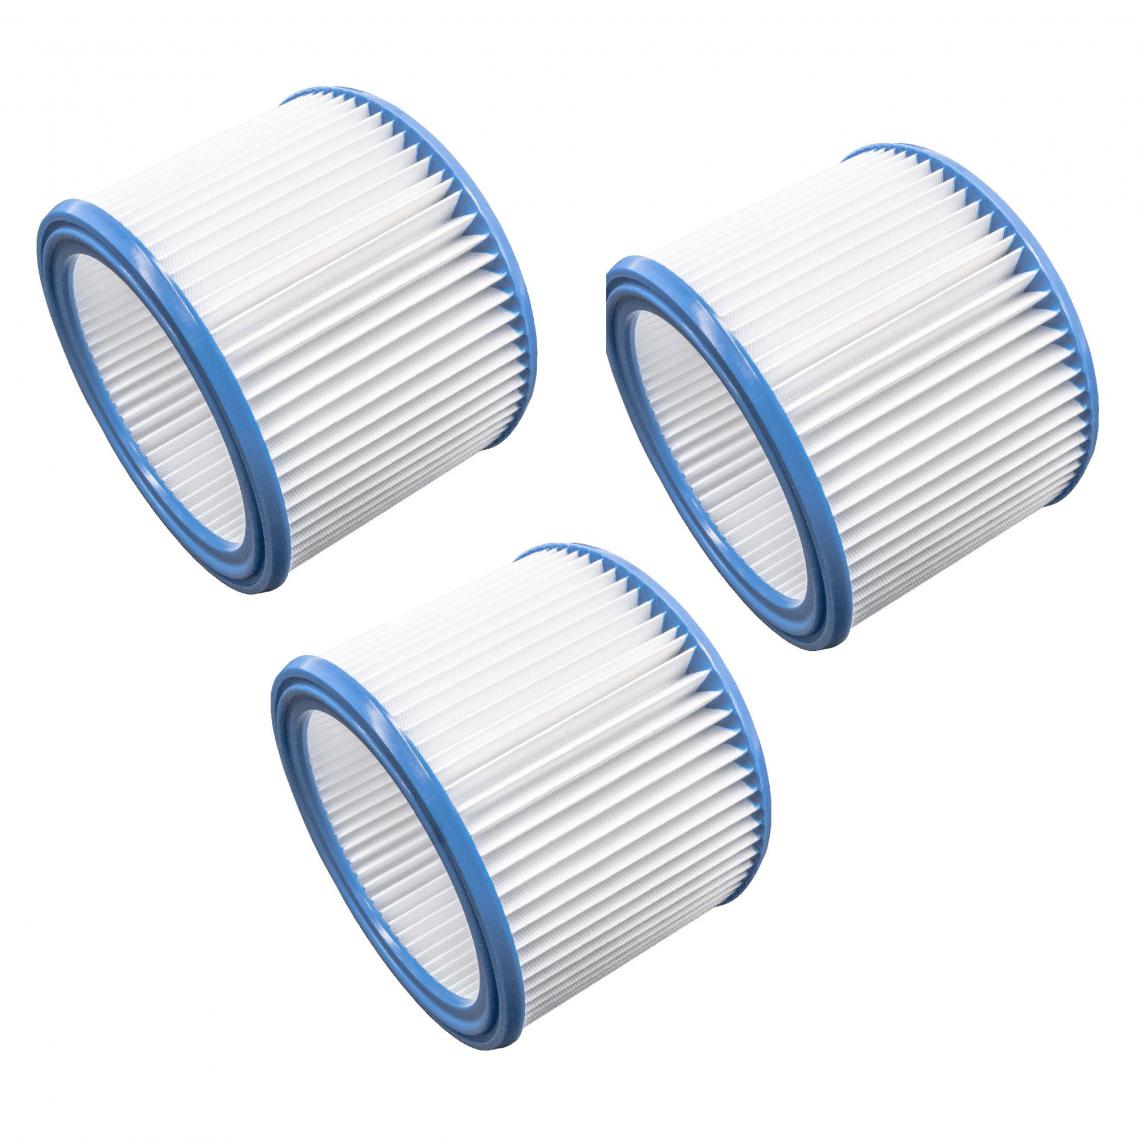 Vhbw - vhbw Set de filtres 3x Filtre plissé compatible avec WAP Turbo SSR, XL, XL-25, XL-E aspirateur à sec ou humide - Filtre à cartouche - Accessoire entretien des sols